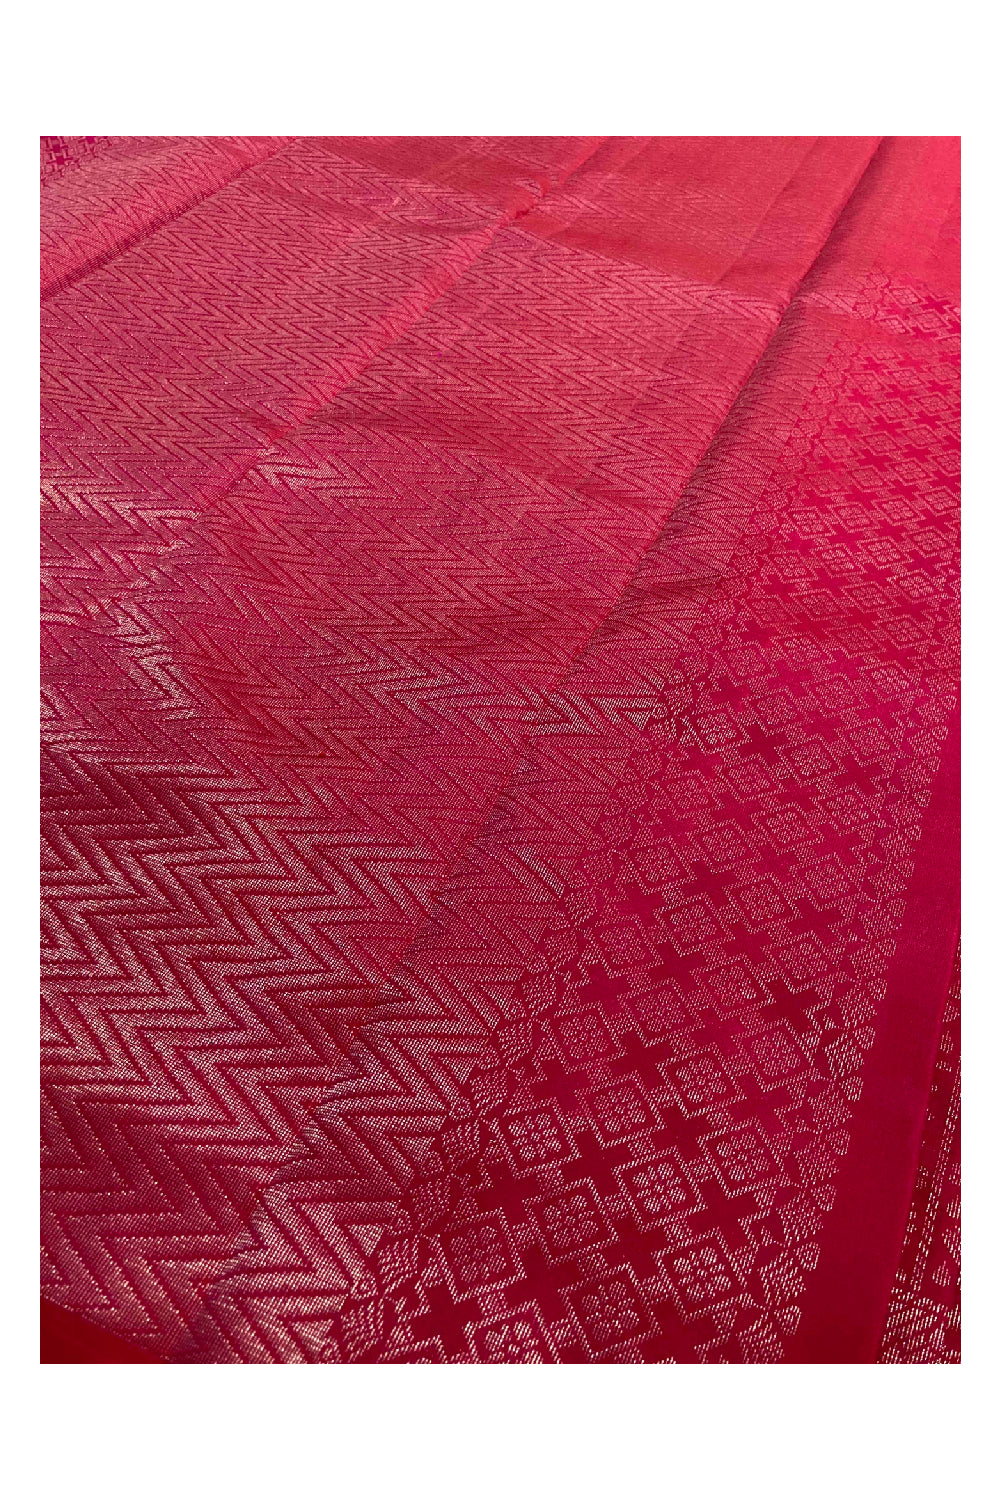 Southloom Handloom Pure Silk Manthrakodi Kanchipuram Saree in Single Magenta Colour and Silver Zari Motifs